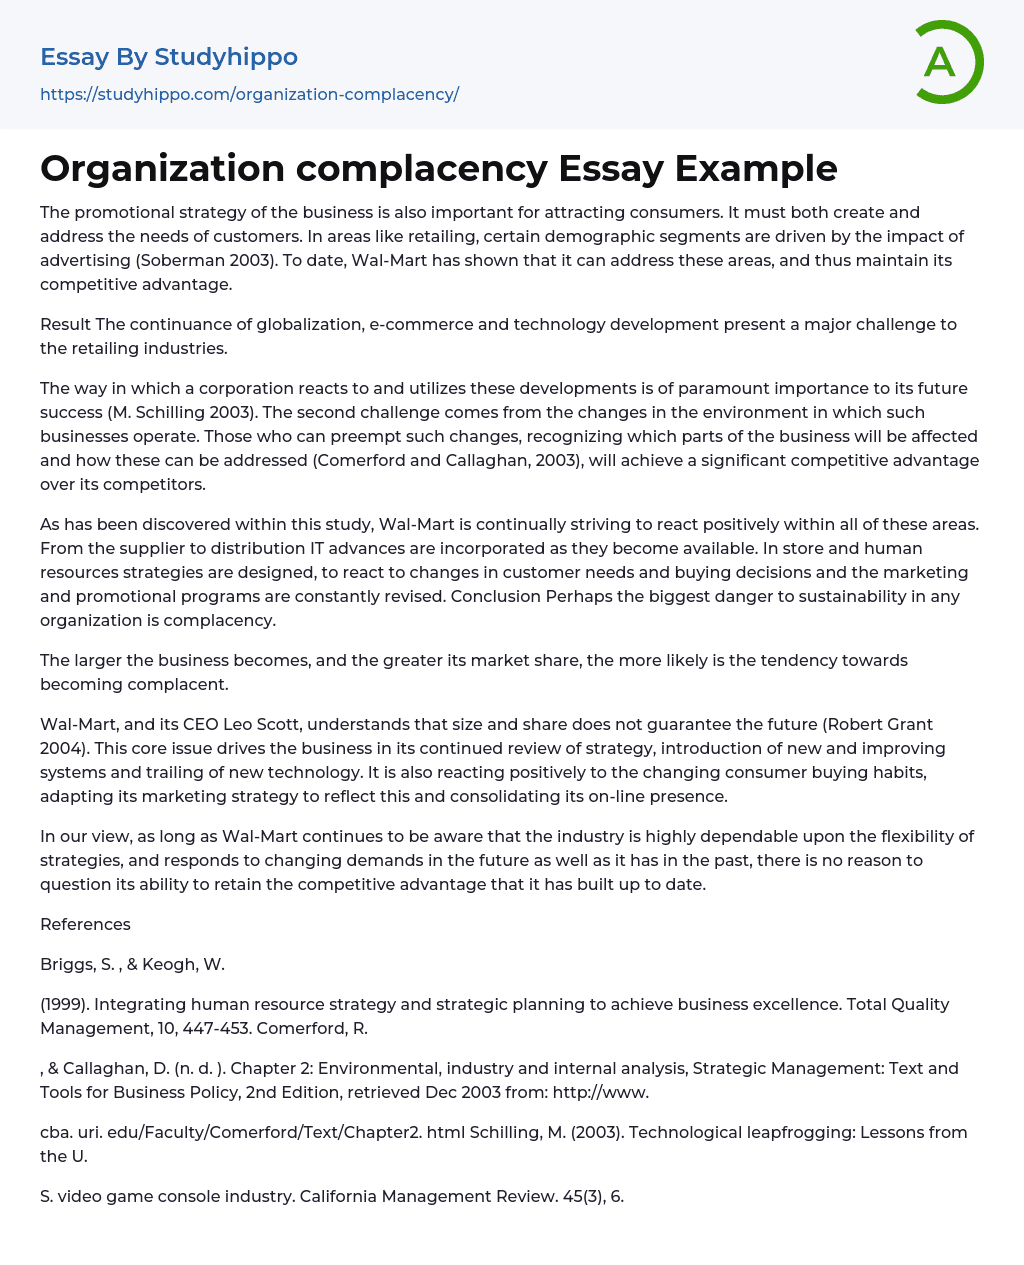 Organization complacency Essay Example